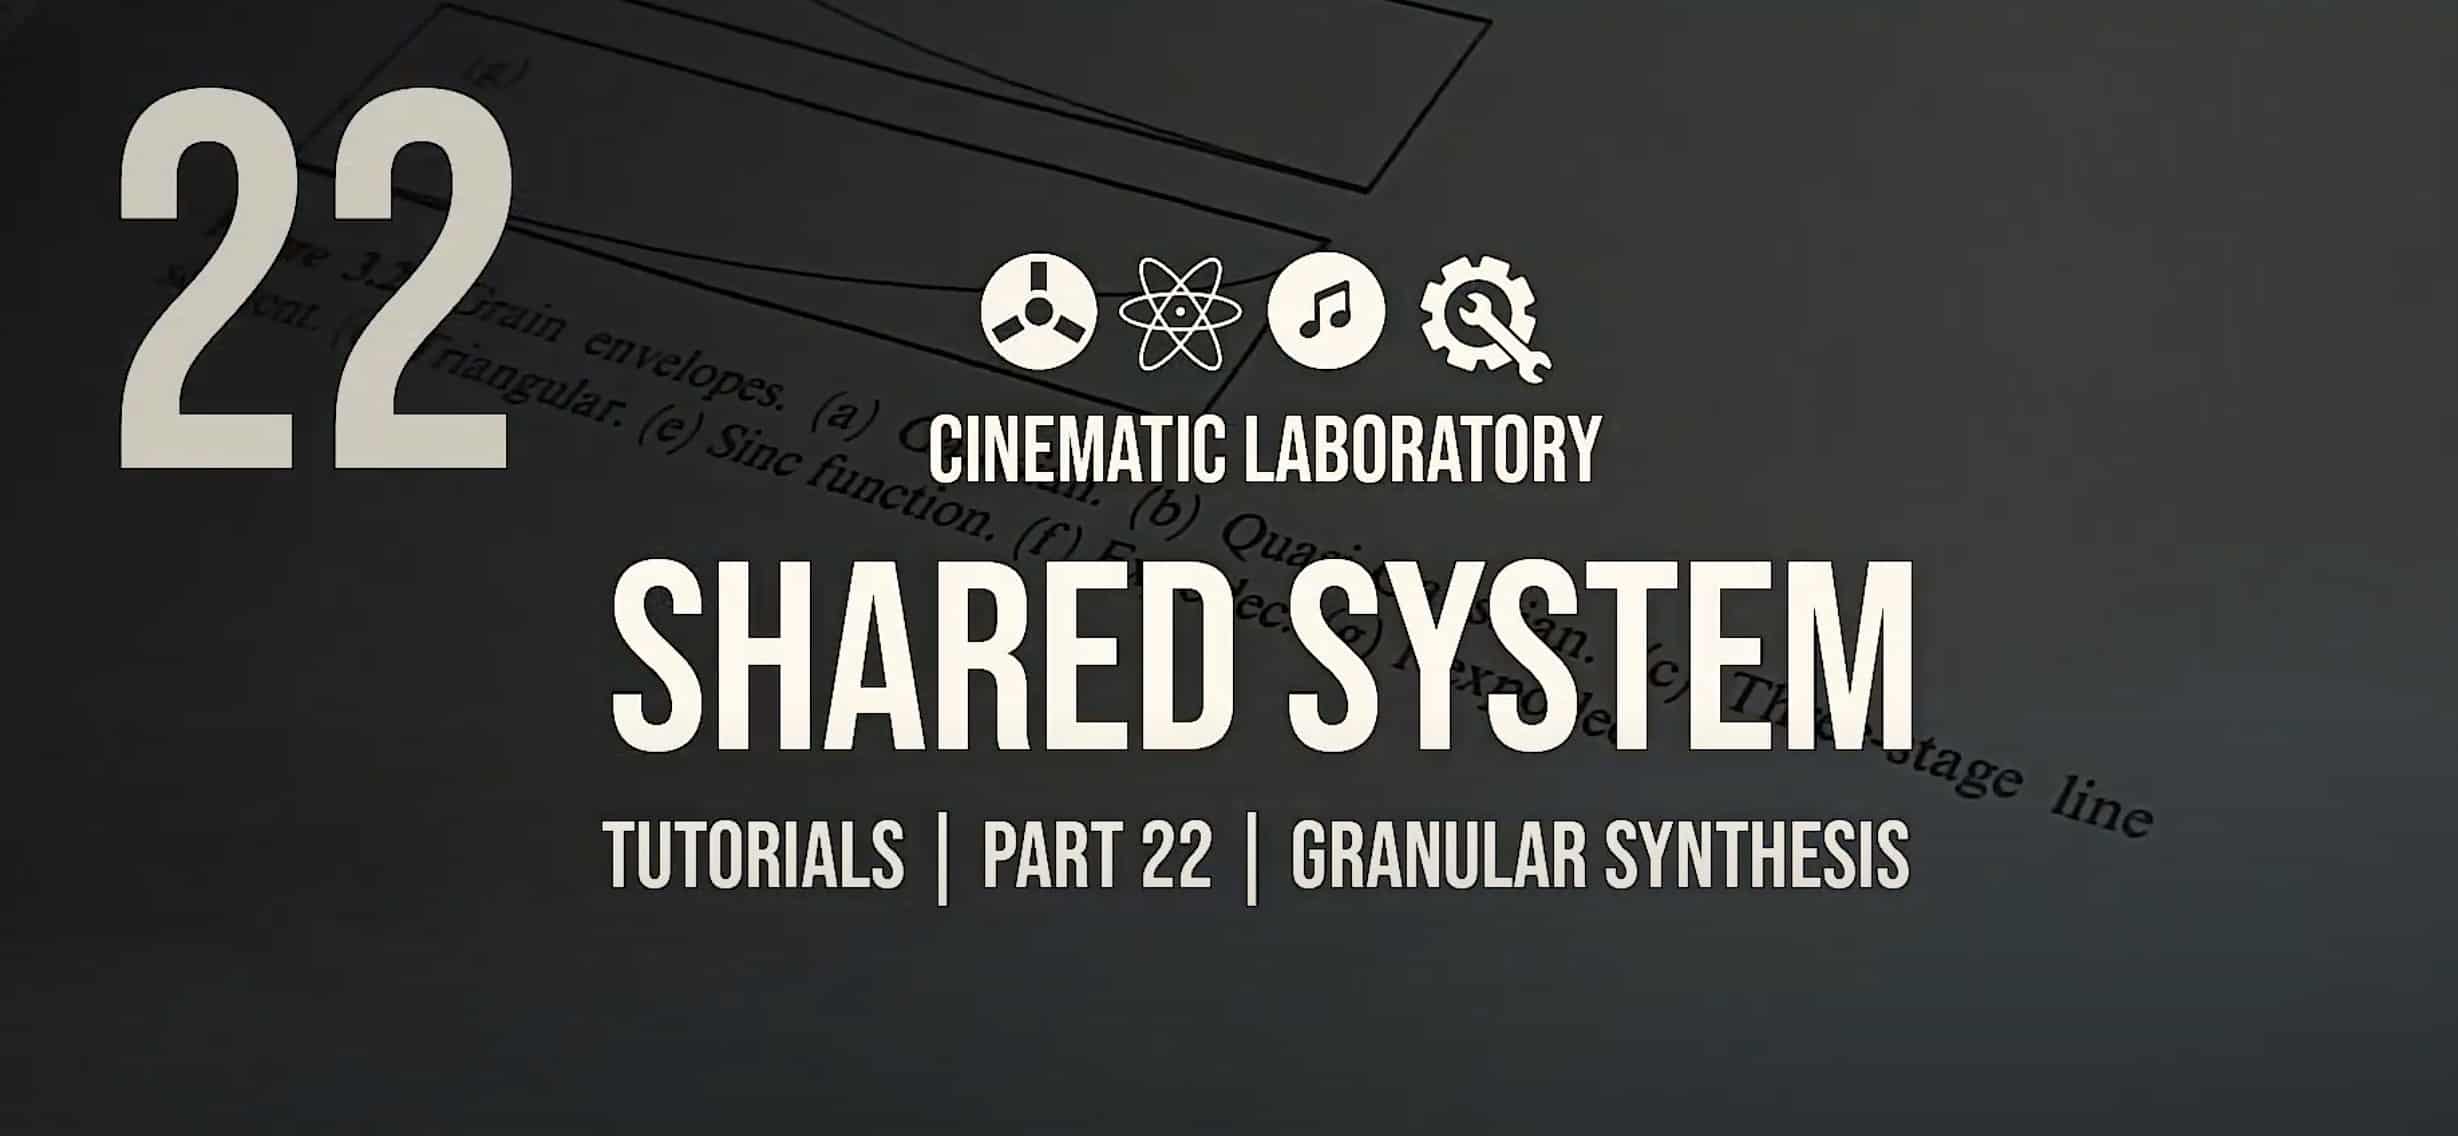 Shared System Tutorials Part 22 Granular Synthesis